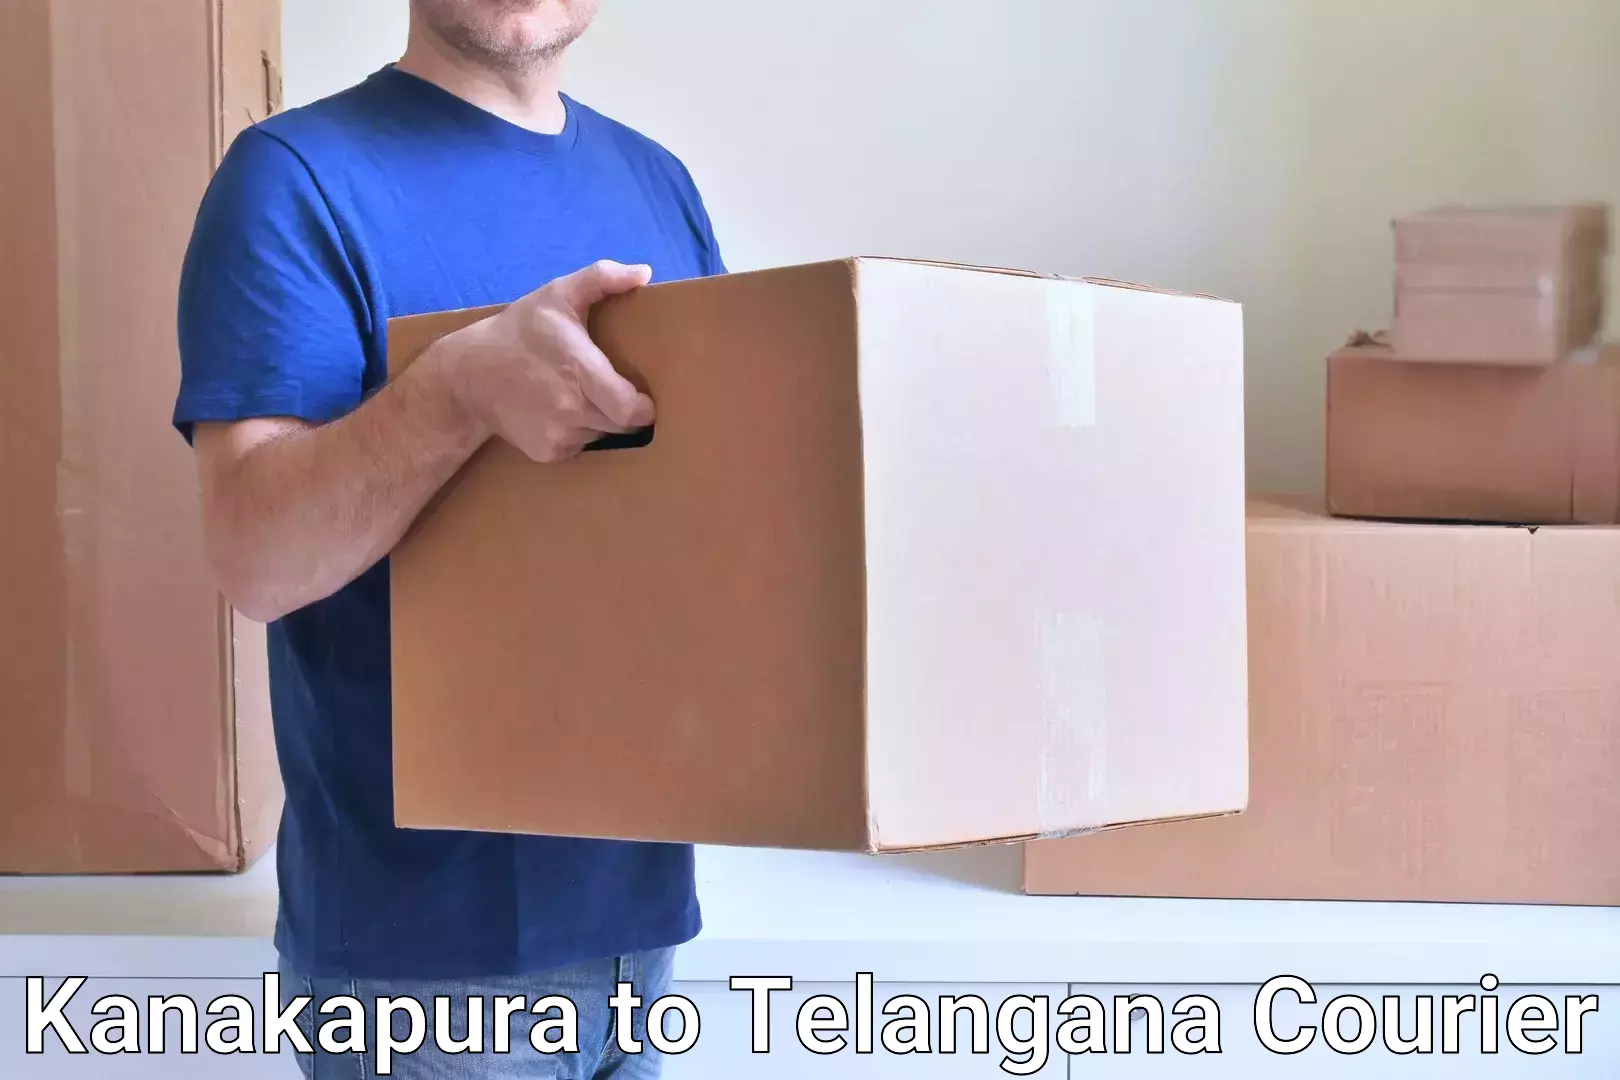 Diverse delivery methods Kanakapura to Gangadhara